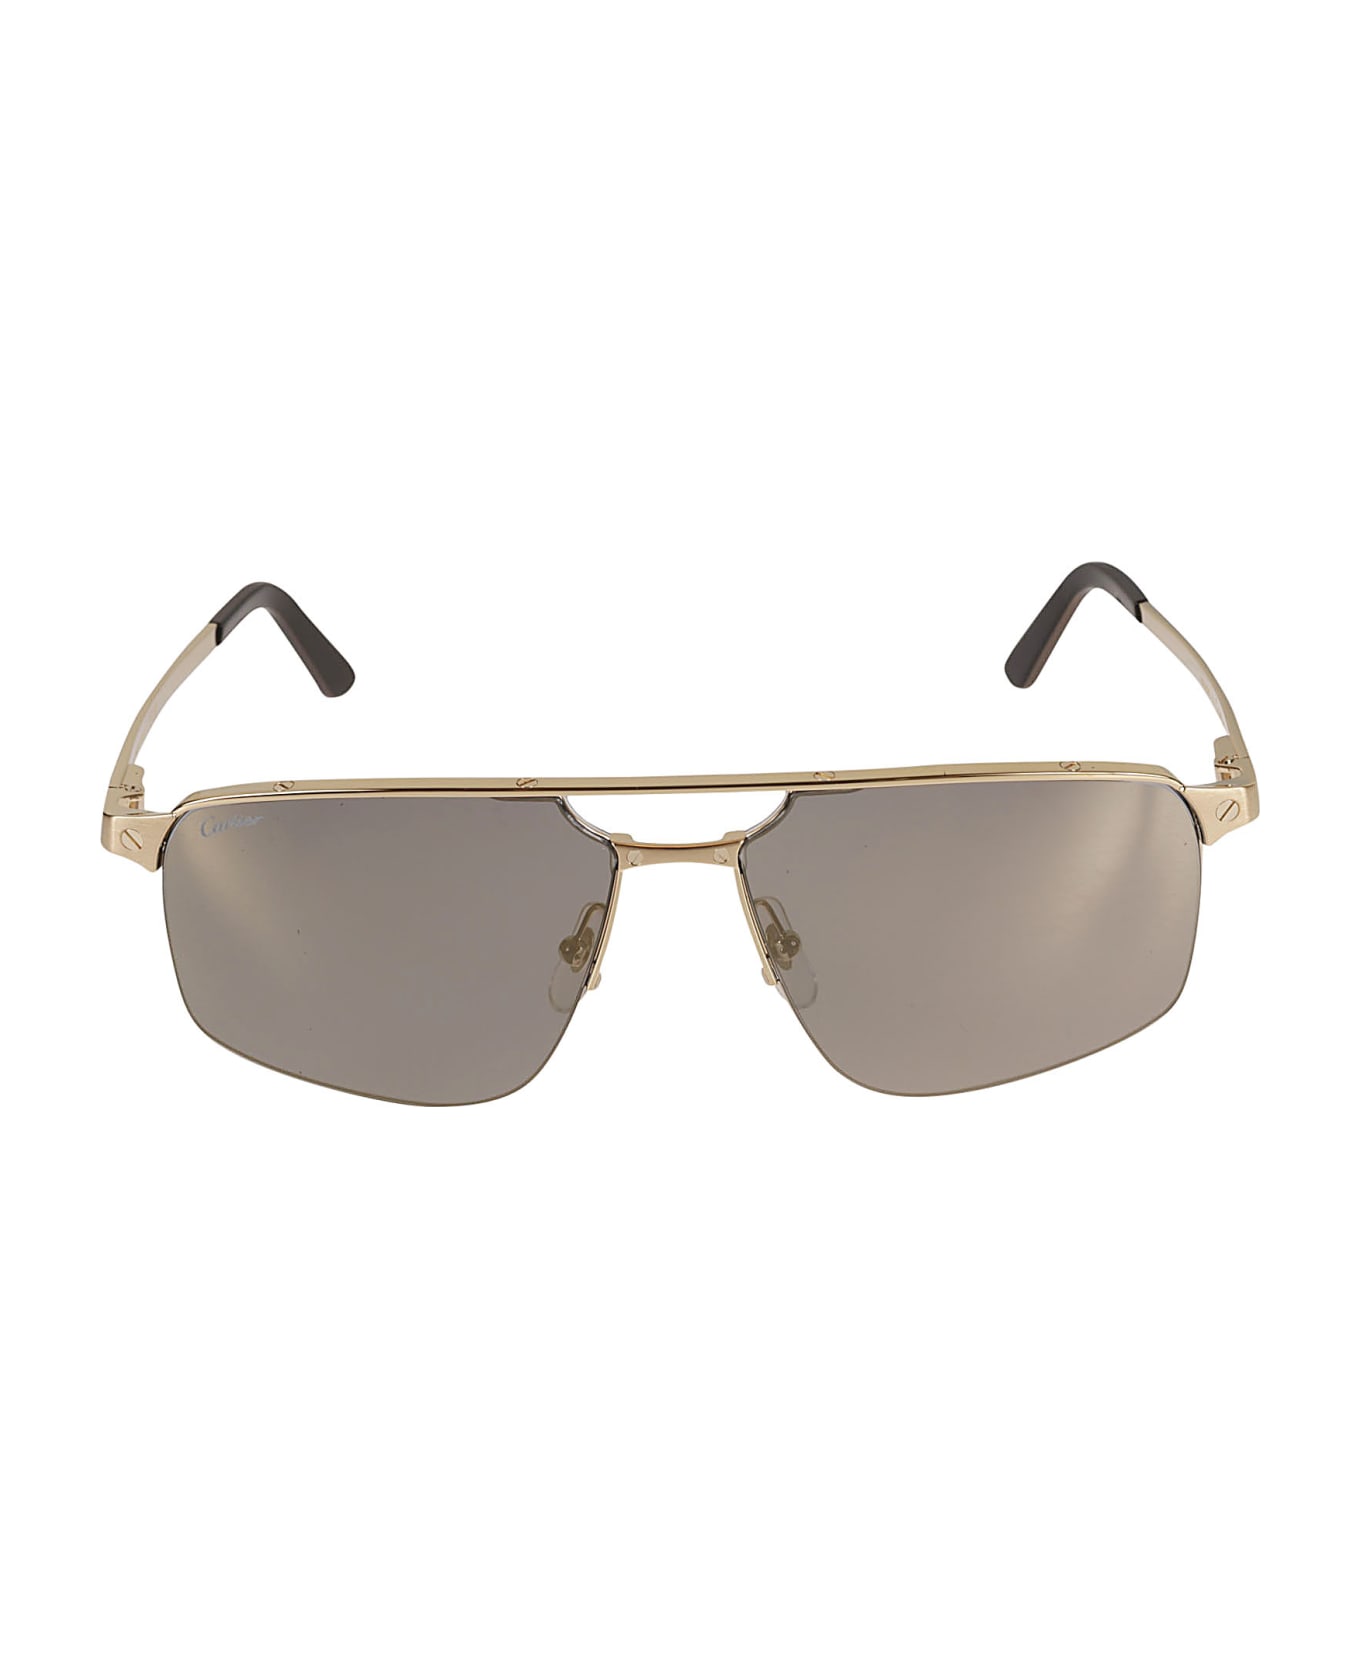 Cartier Eyewear Aviator Square Sunglasses - Gold/Bronze